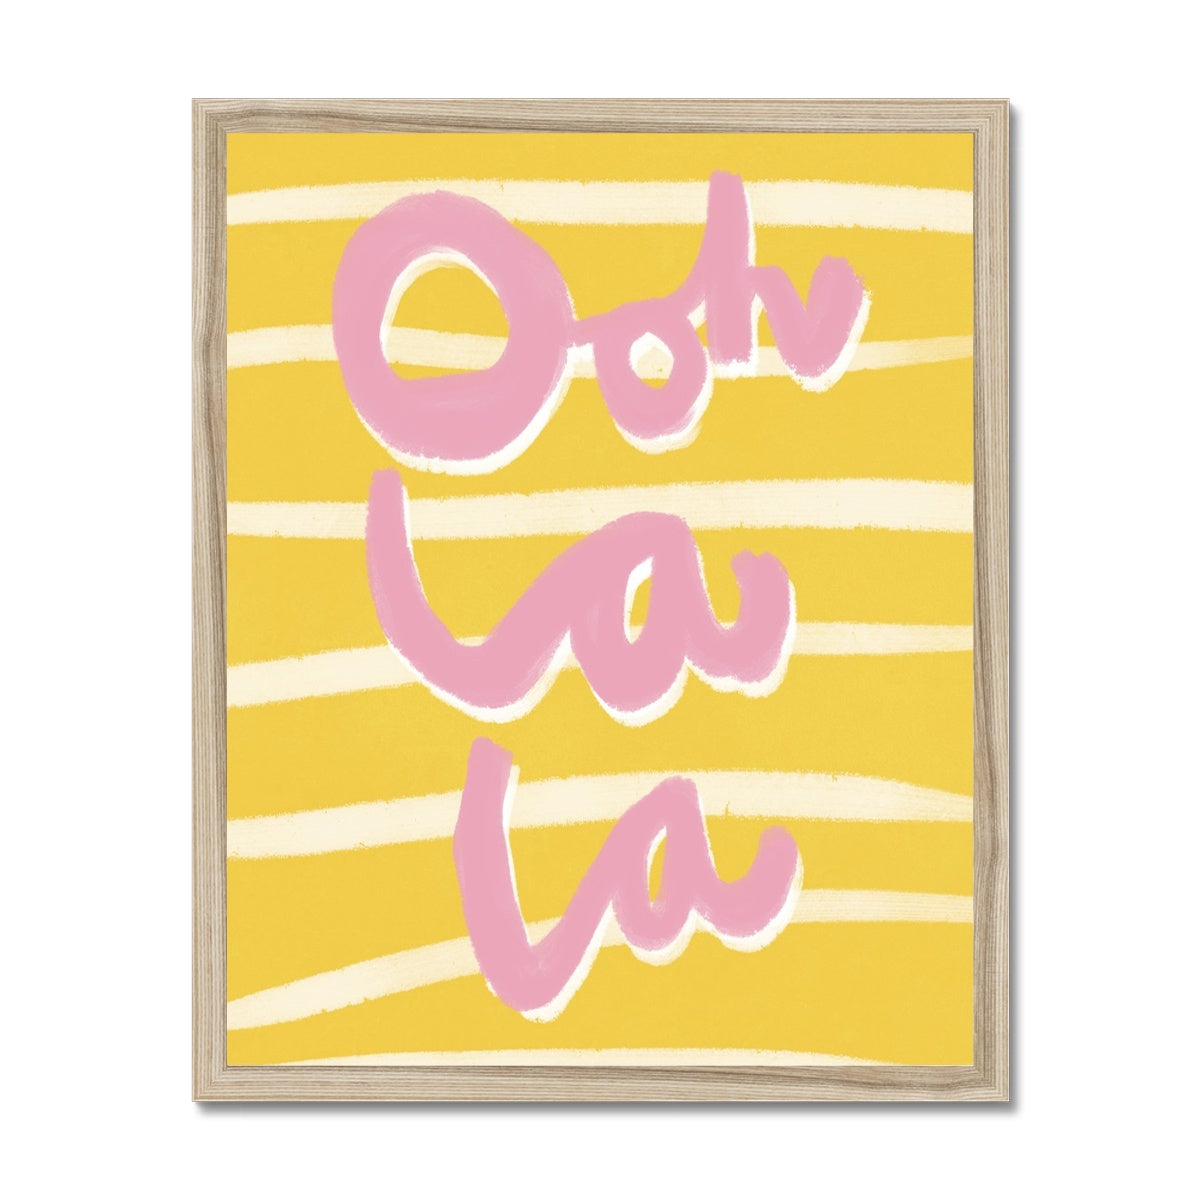 Ooh La La Art Print - Yellow, White and Pink Framed Print